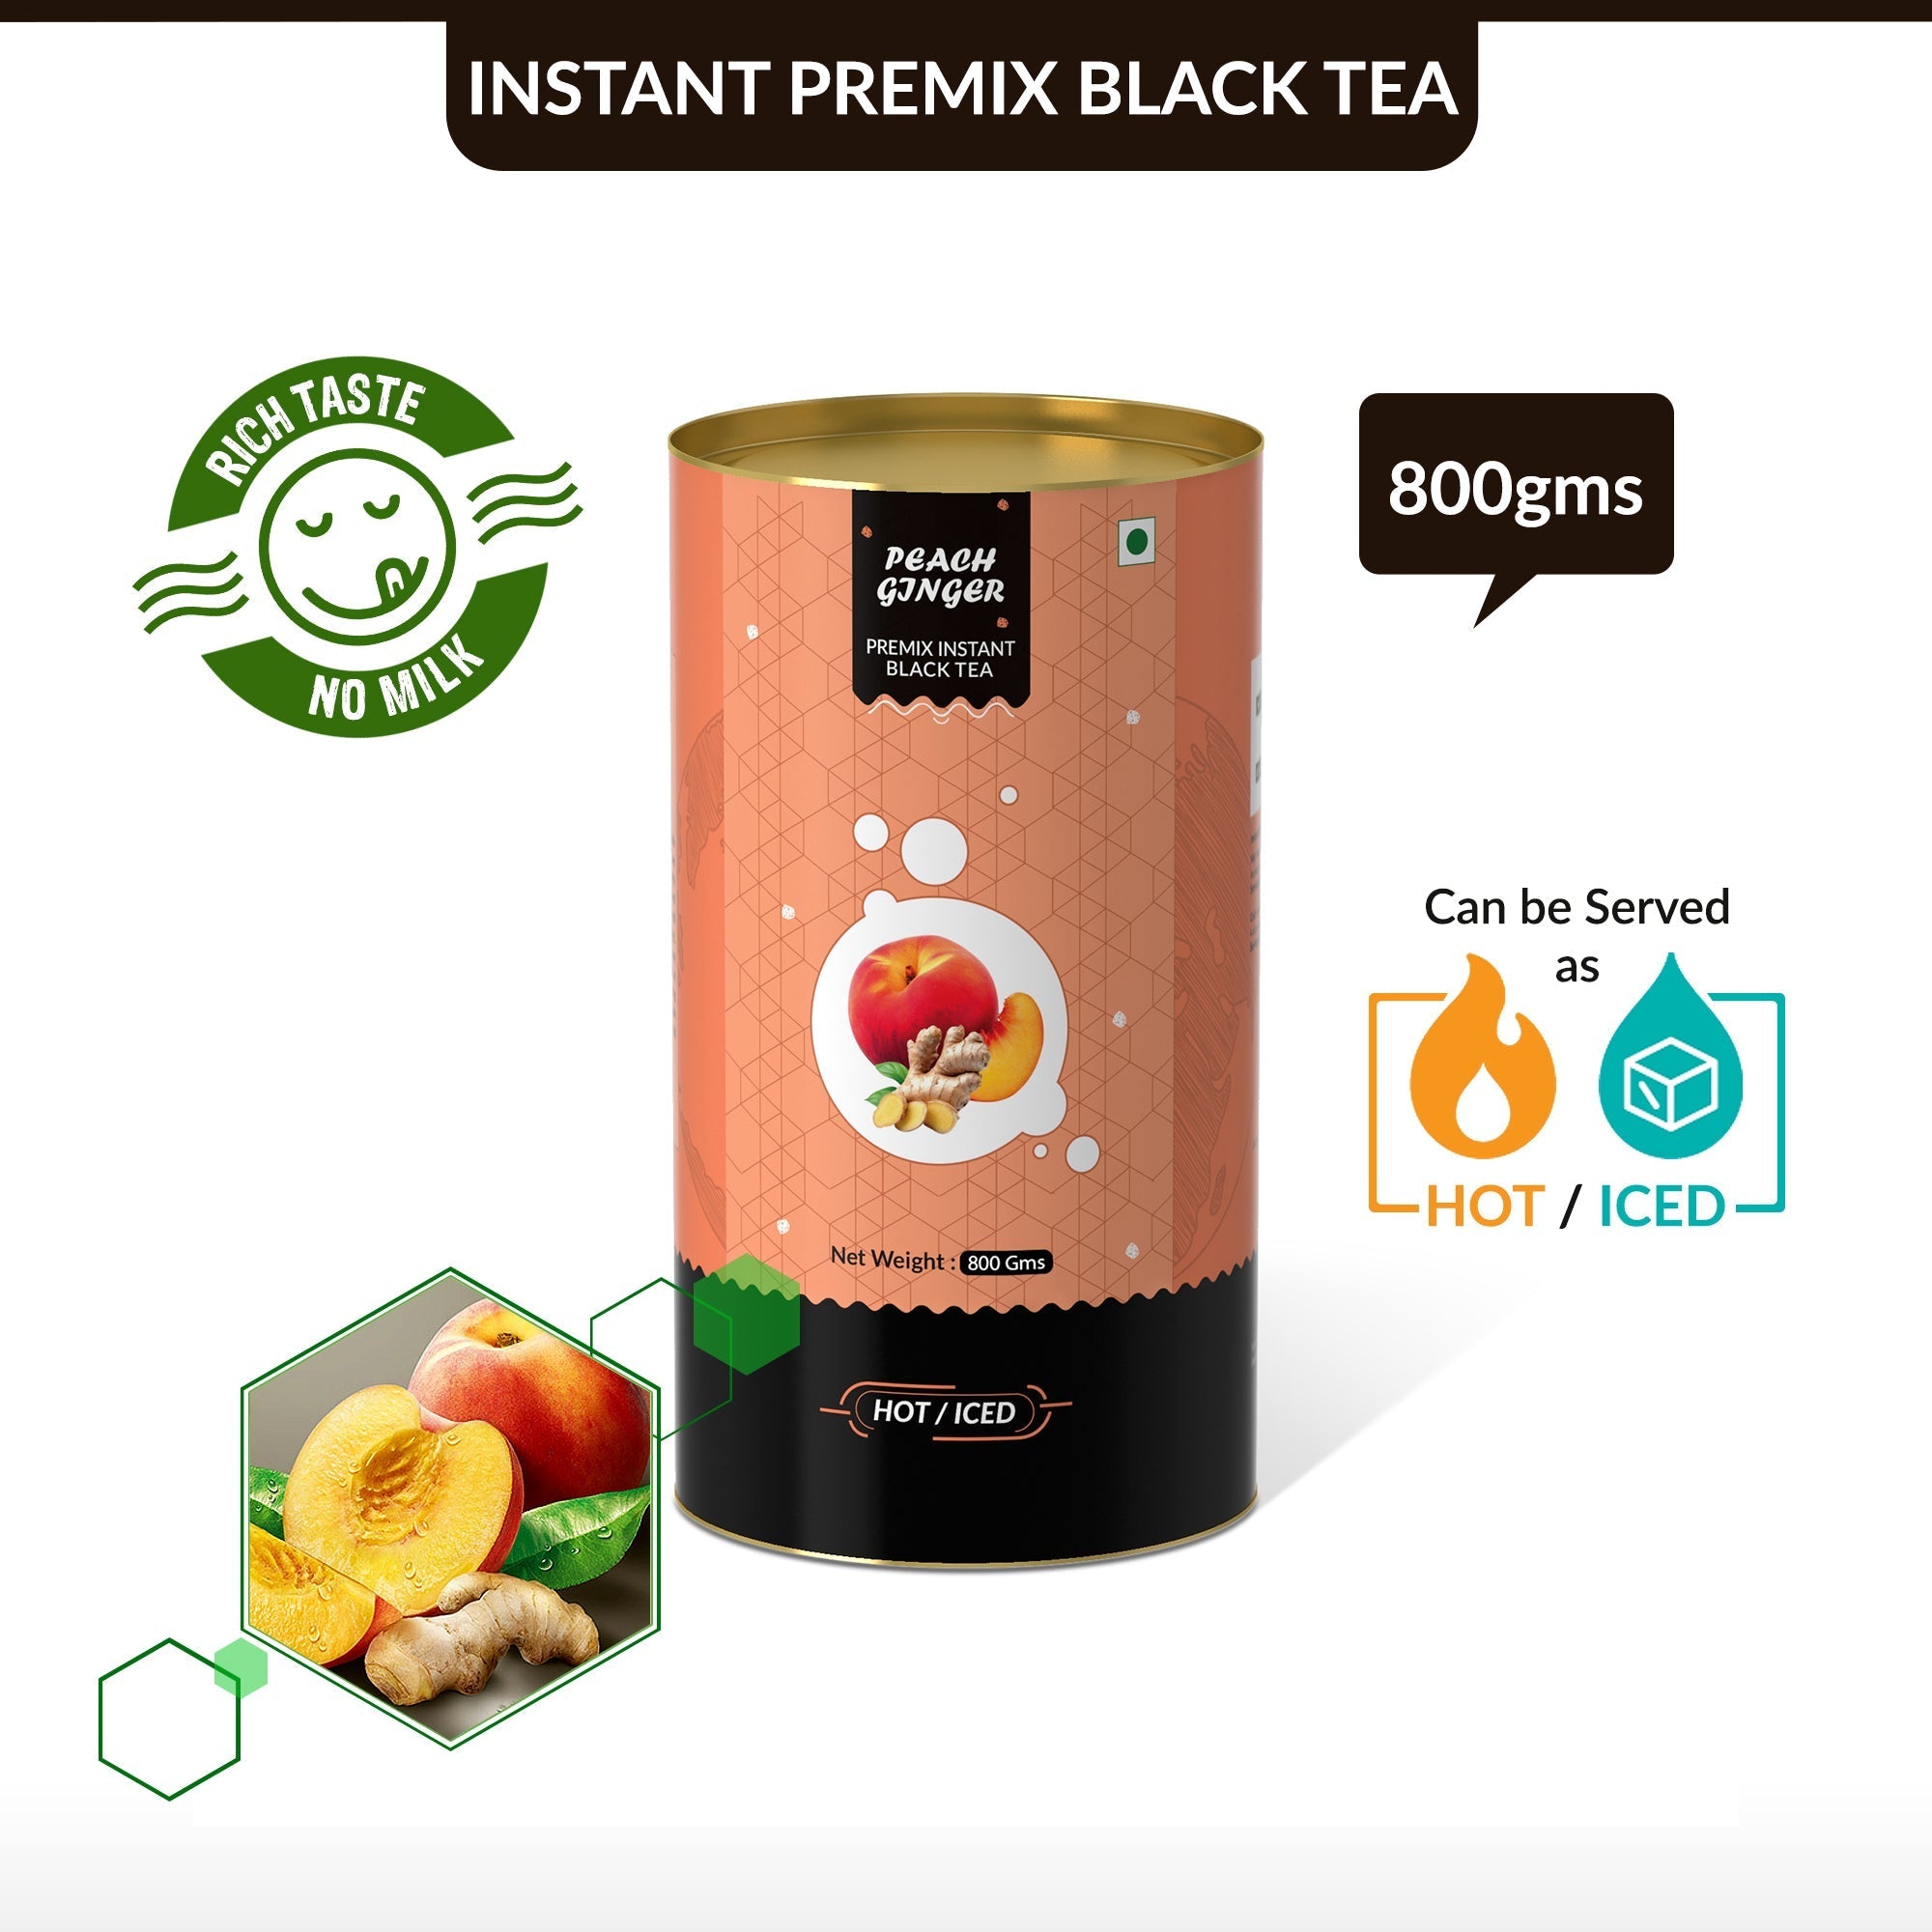 Peach Ginger Flavored Instant Black Tea - 800 gms